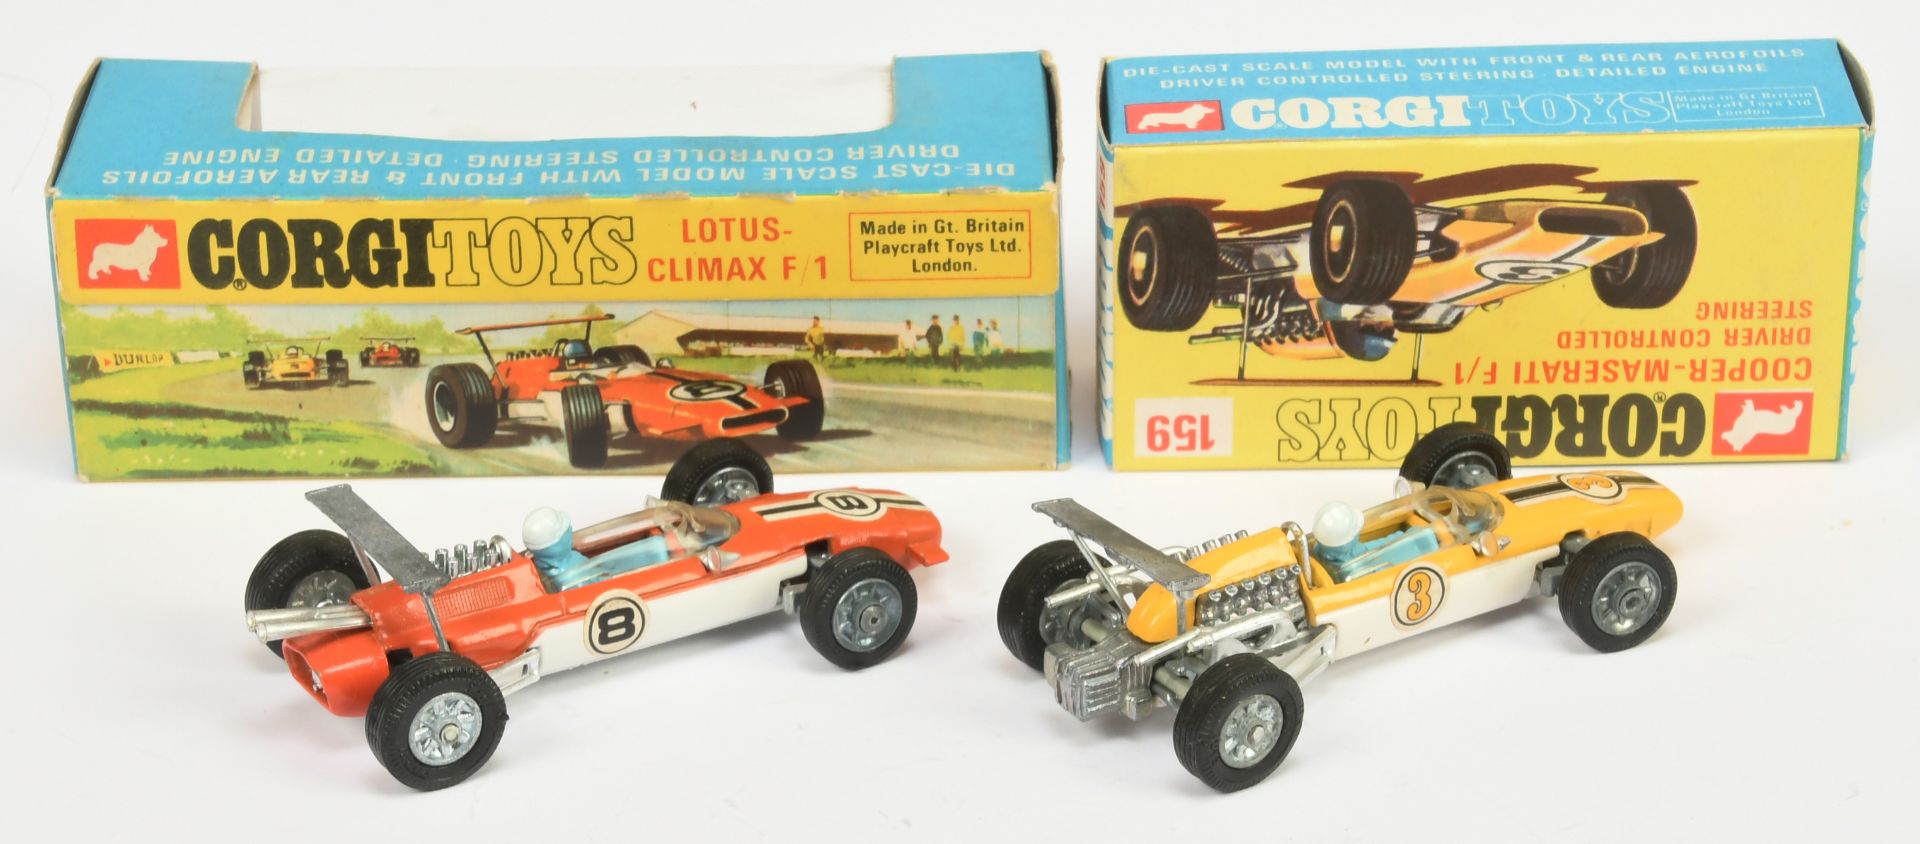 Corgi Toys Formula 1 Racing Cars Group A Pair - (1) 158 Lotus-Climax - Orange and white, cast hub... - Image 2 of 2